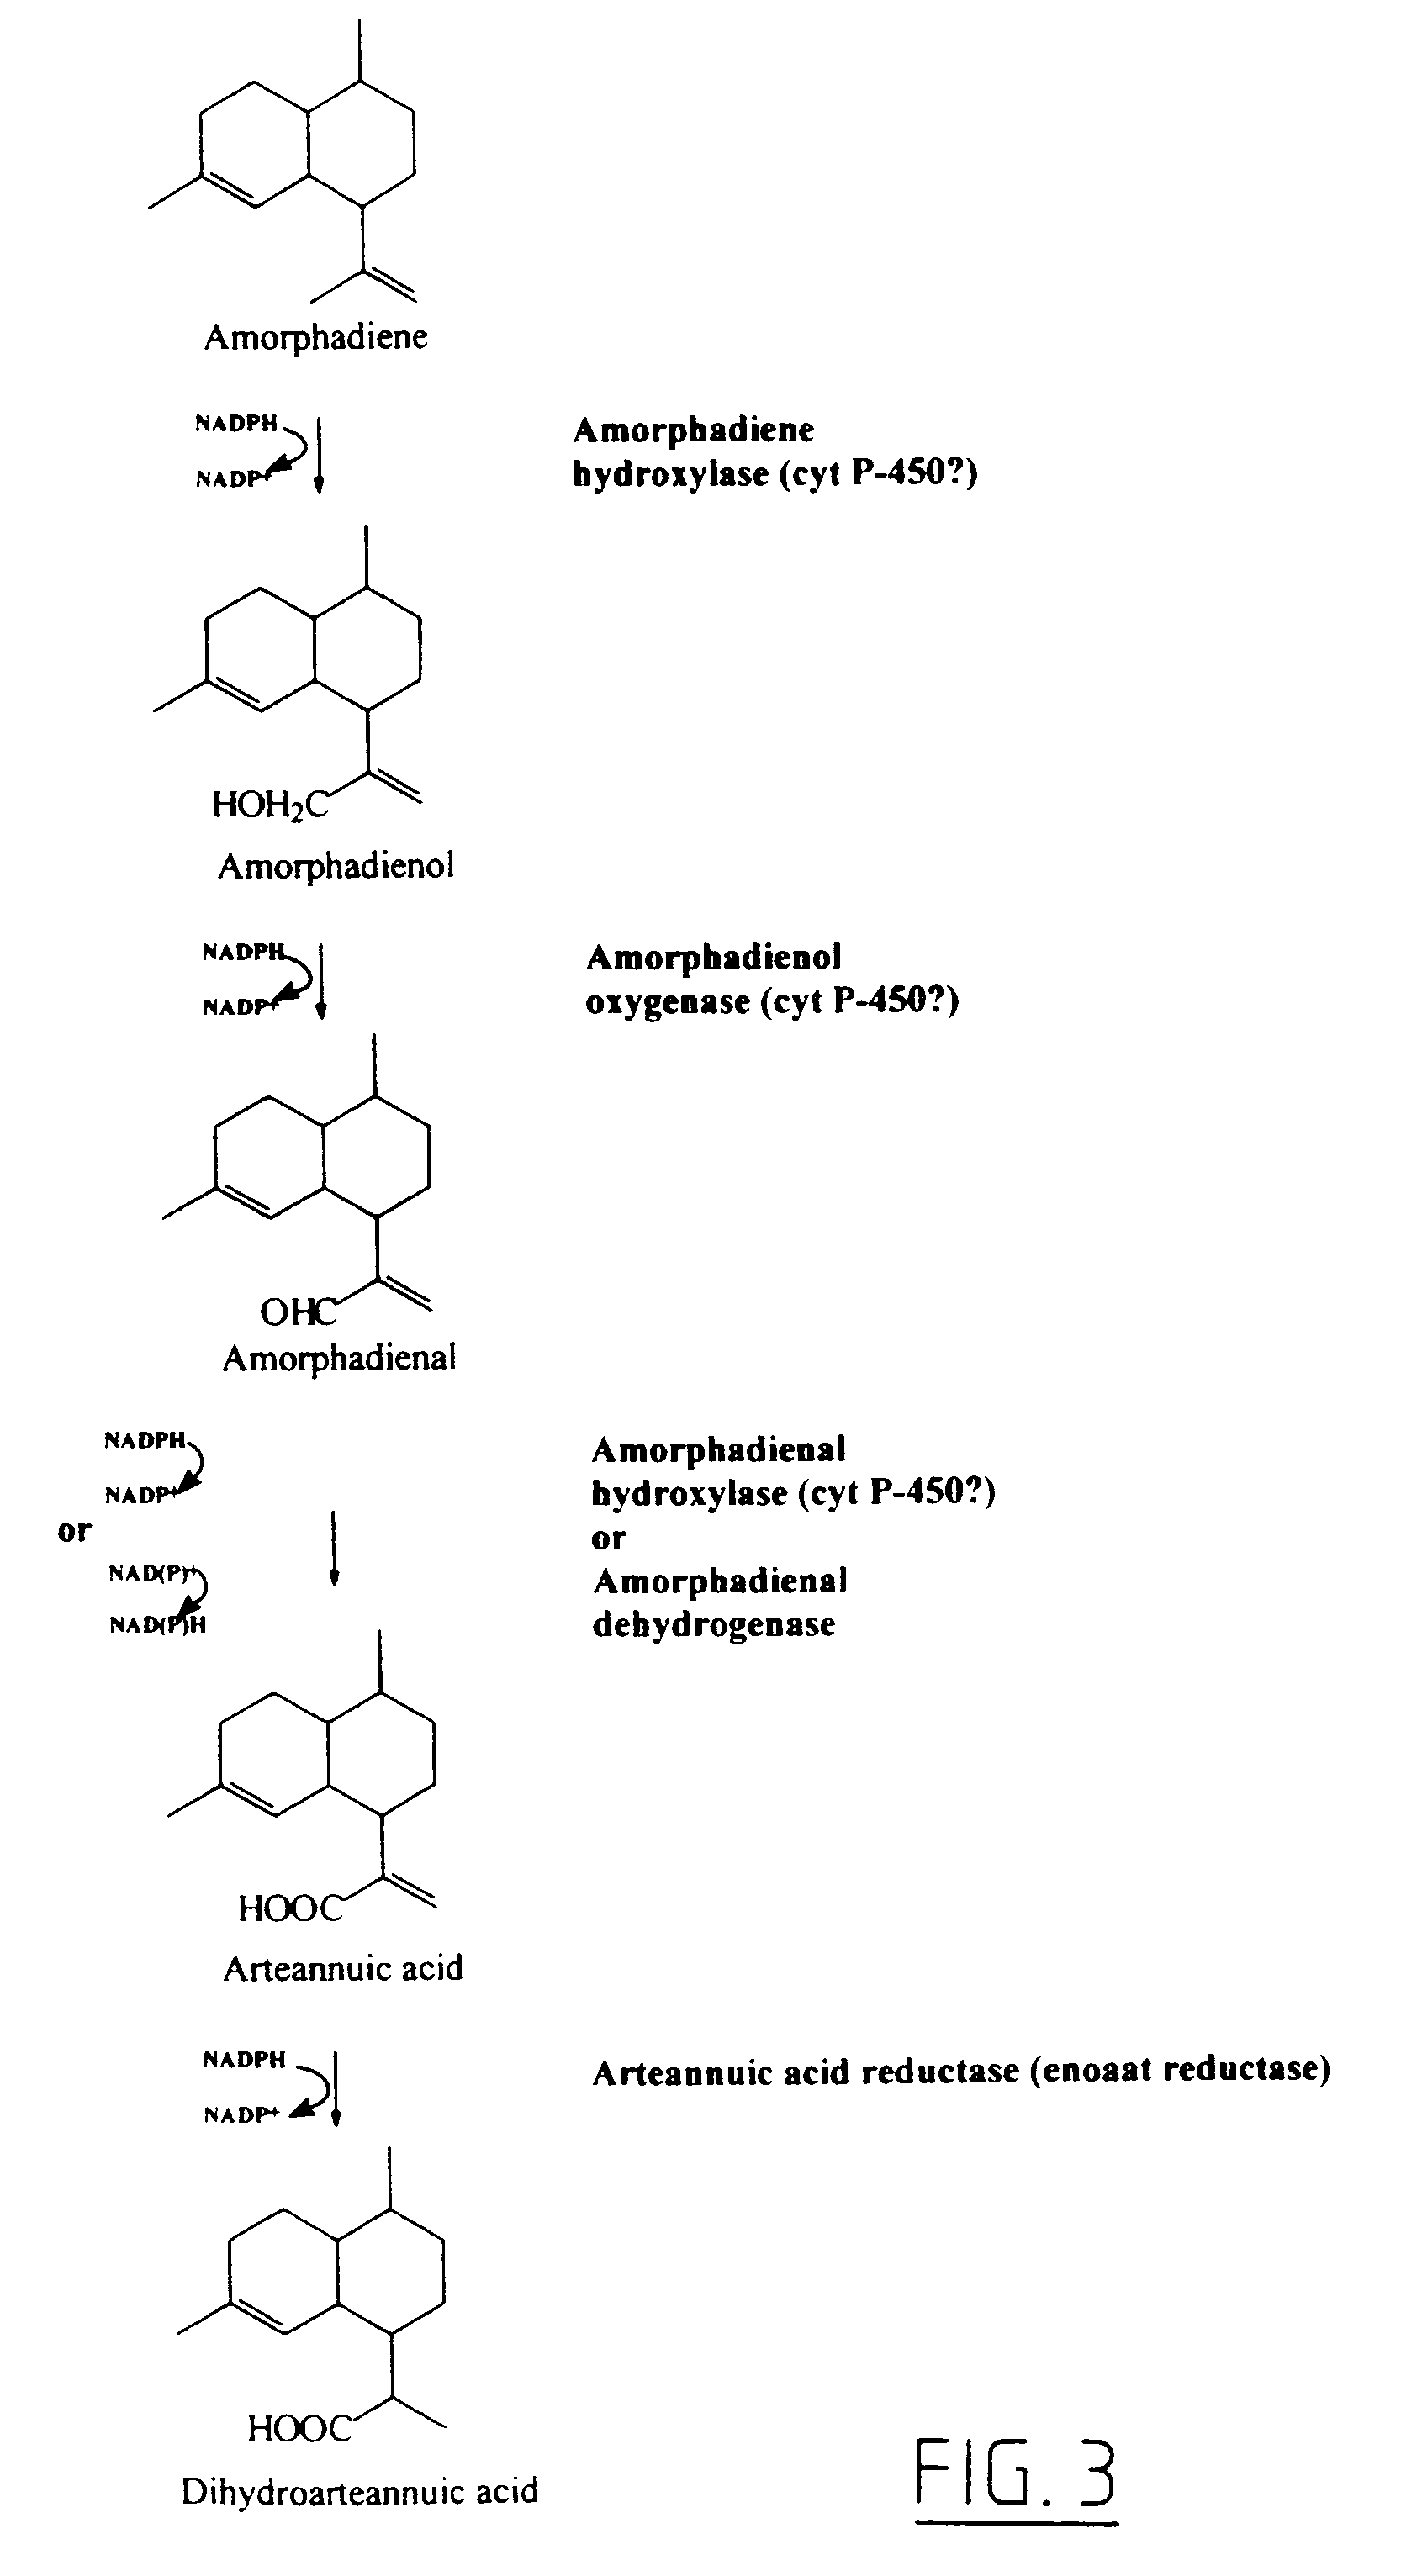 Transgenic amorpha-4,11-diene synthesis